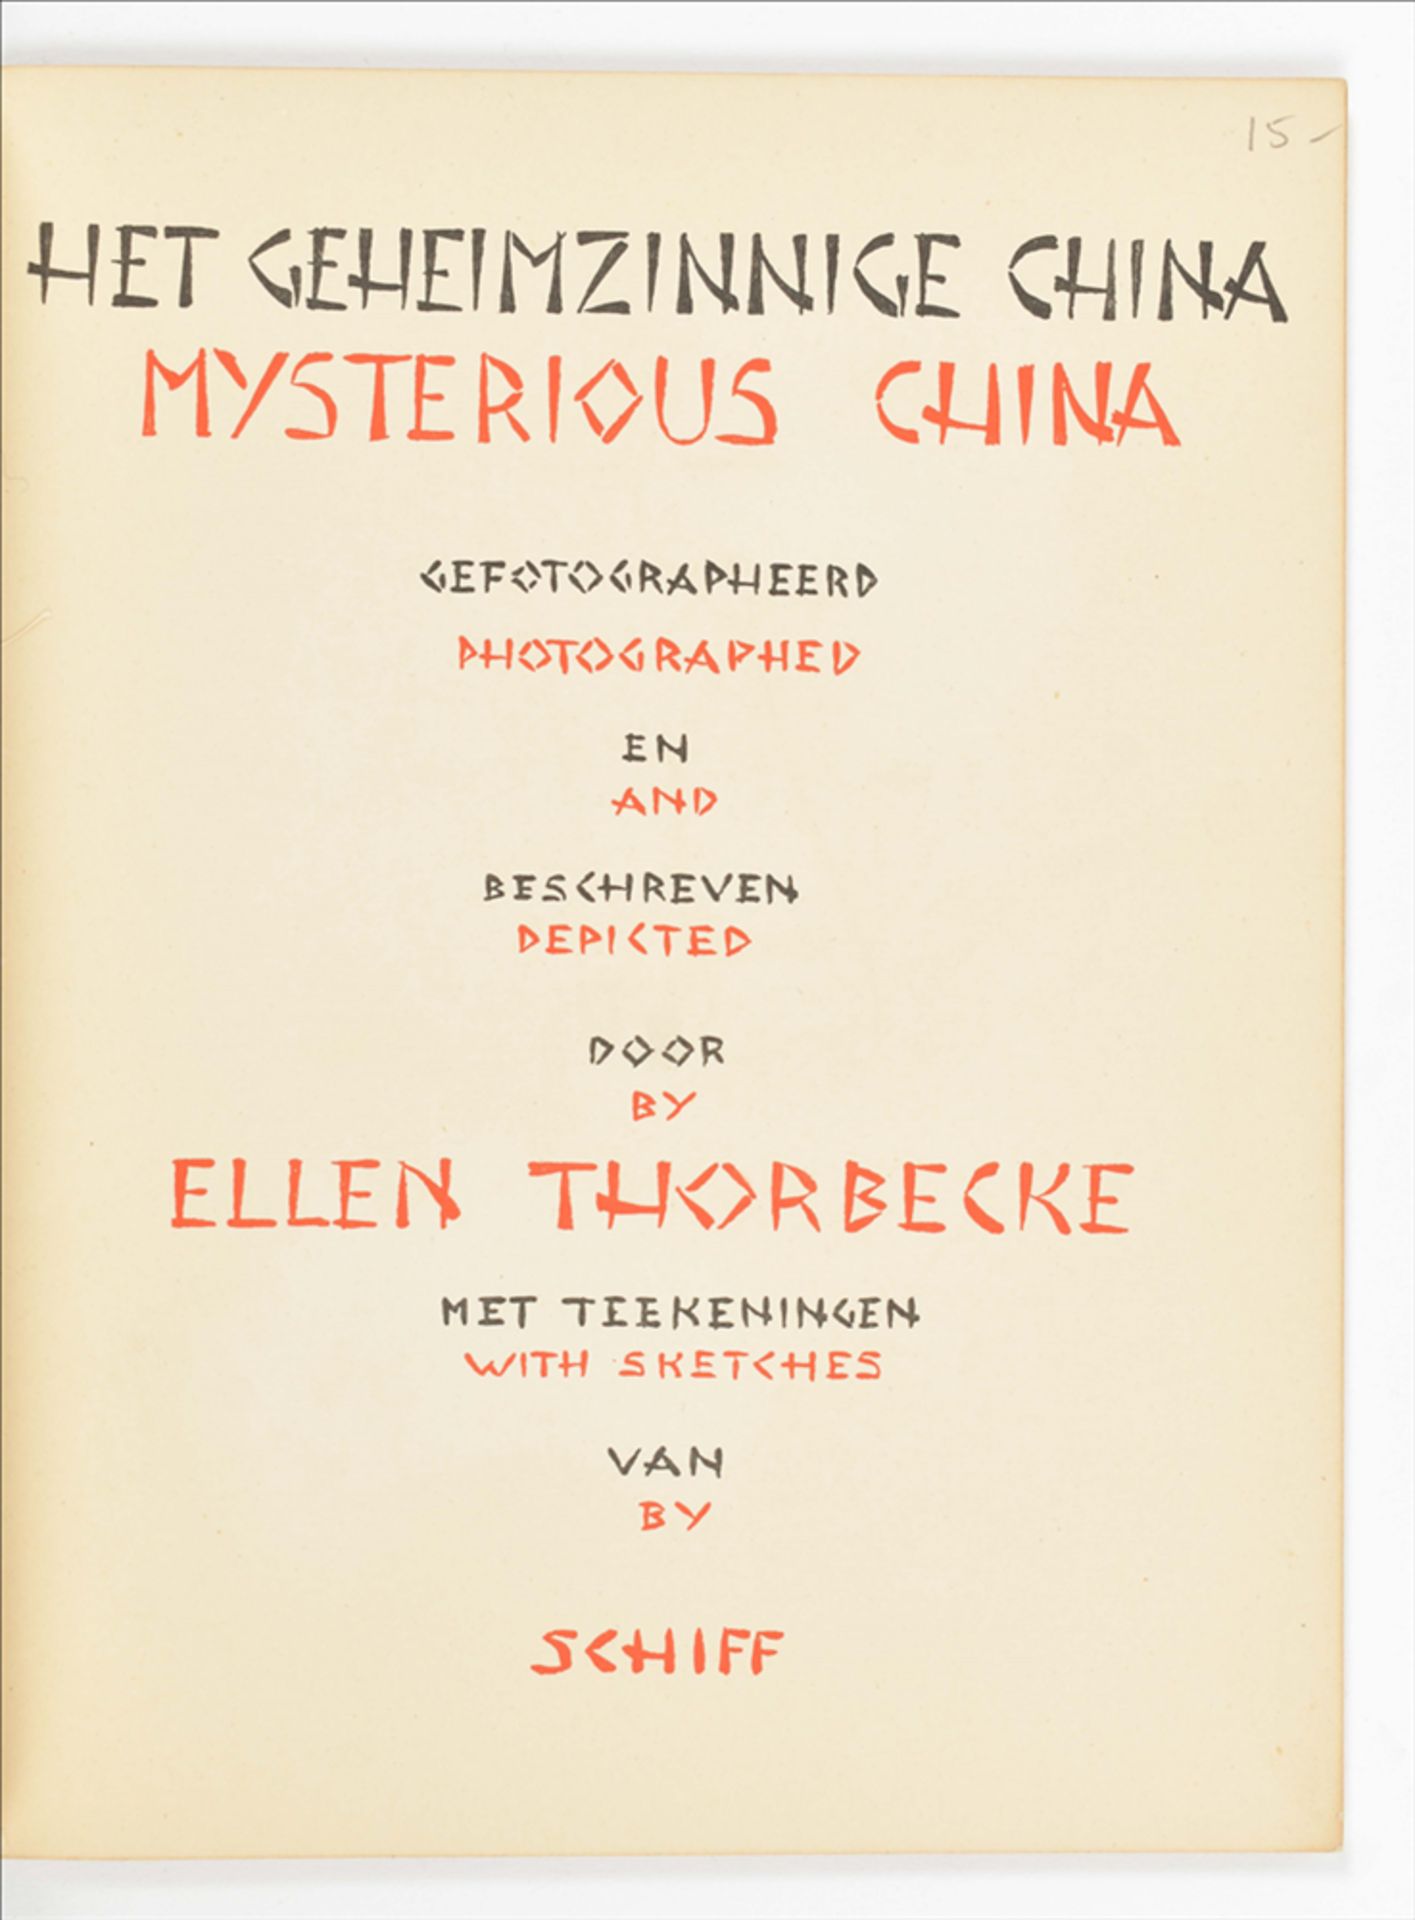 [Ellen Thorbecke. China] Het geheimzinnige China. Mysterious China - Image 4 of 10